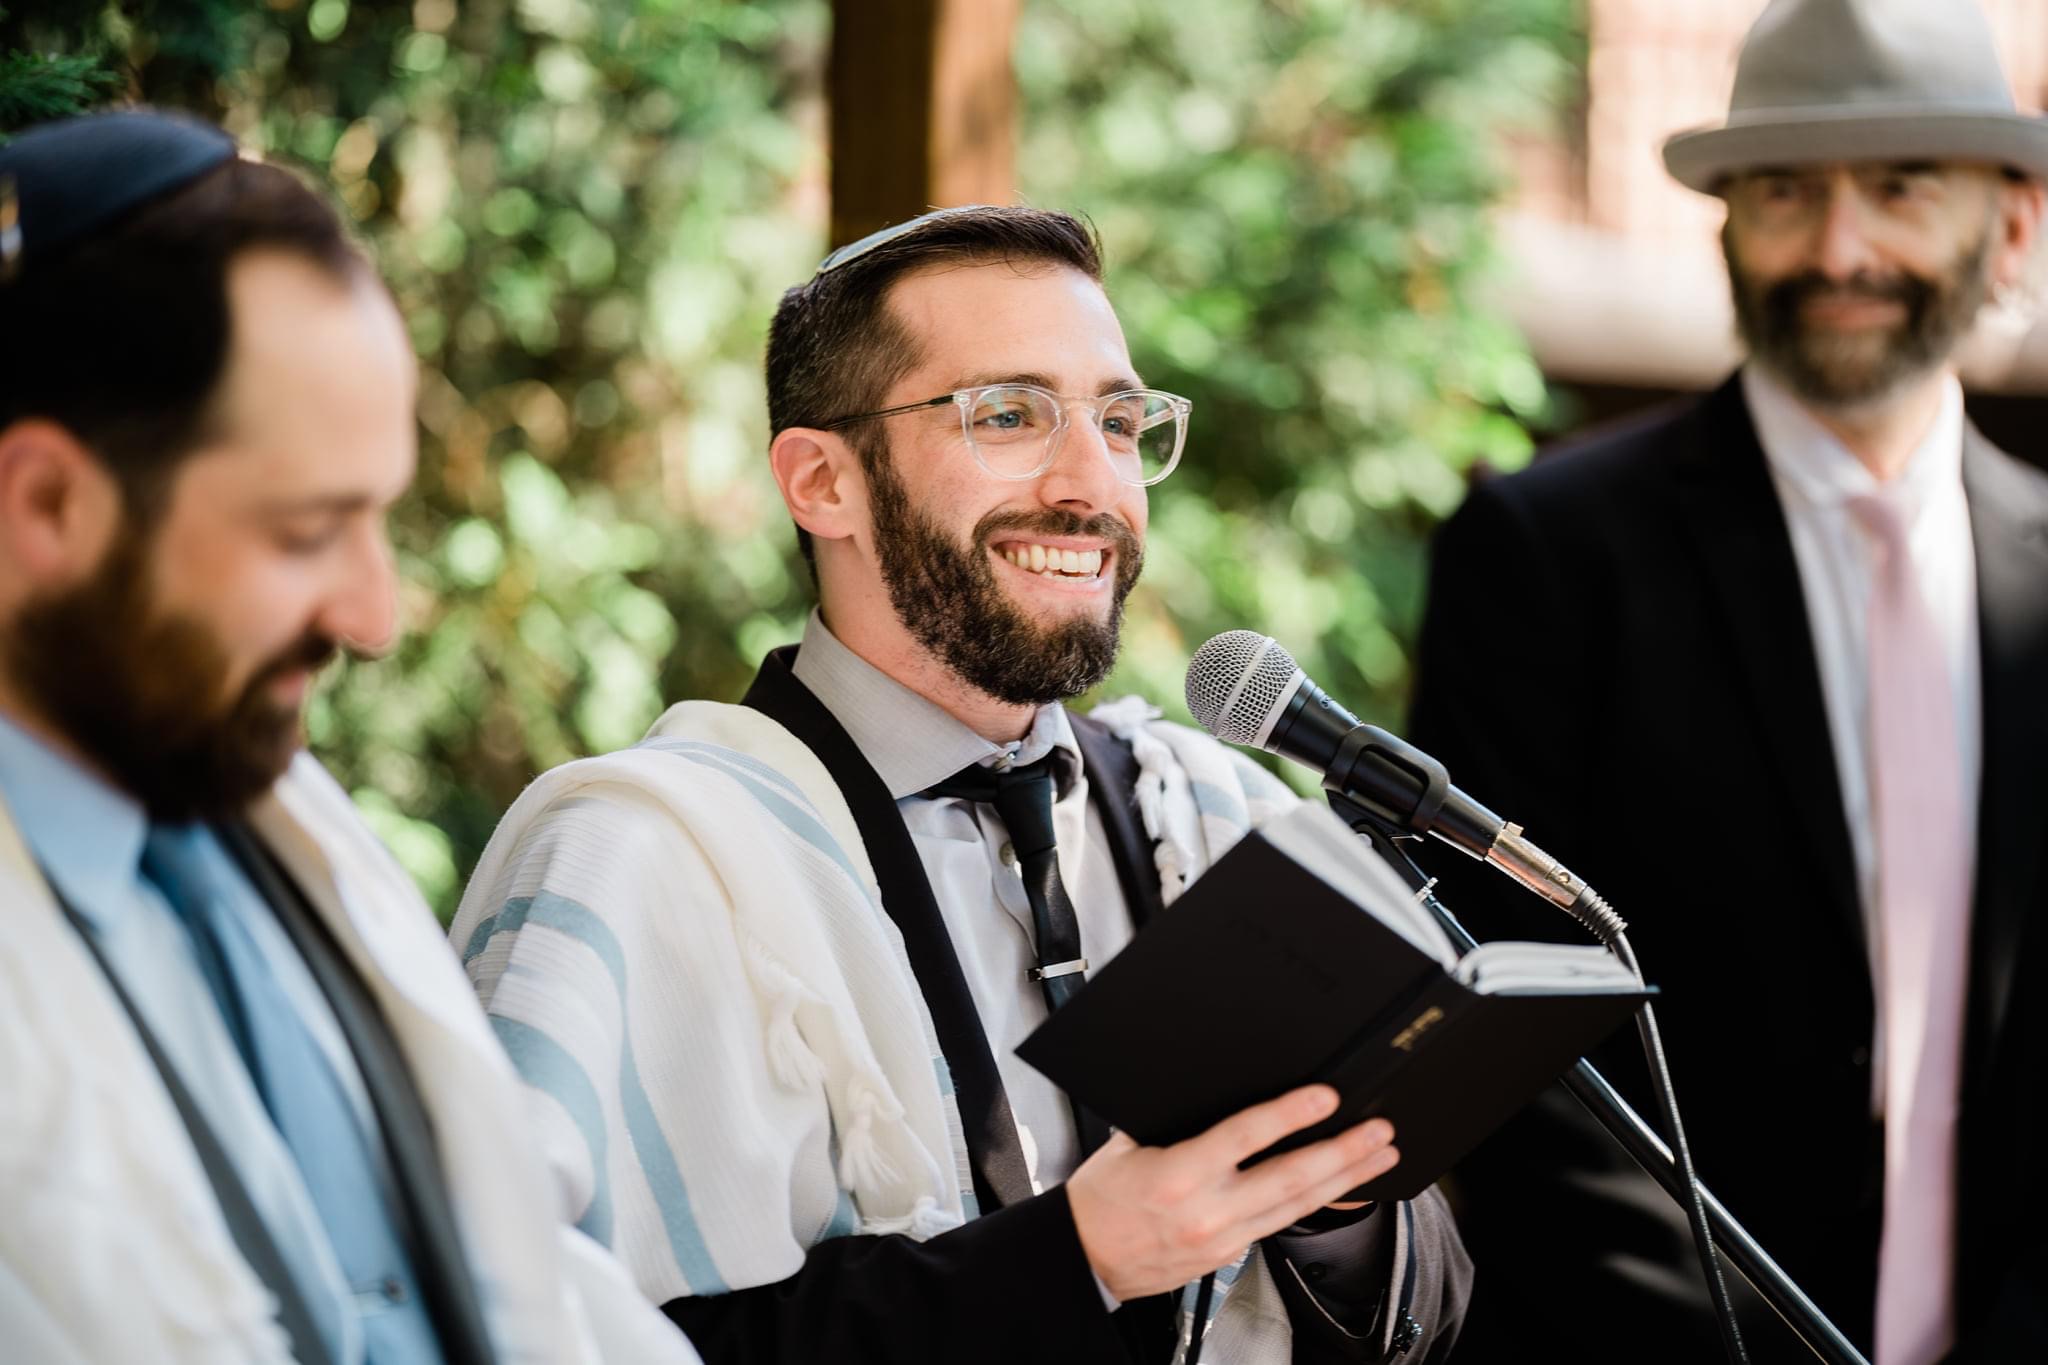 Rabbi Sam officiates at a wedding under the chuppah